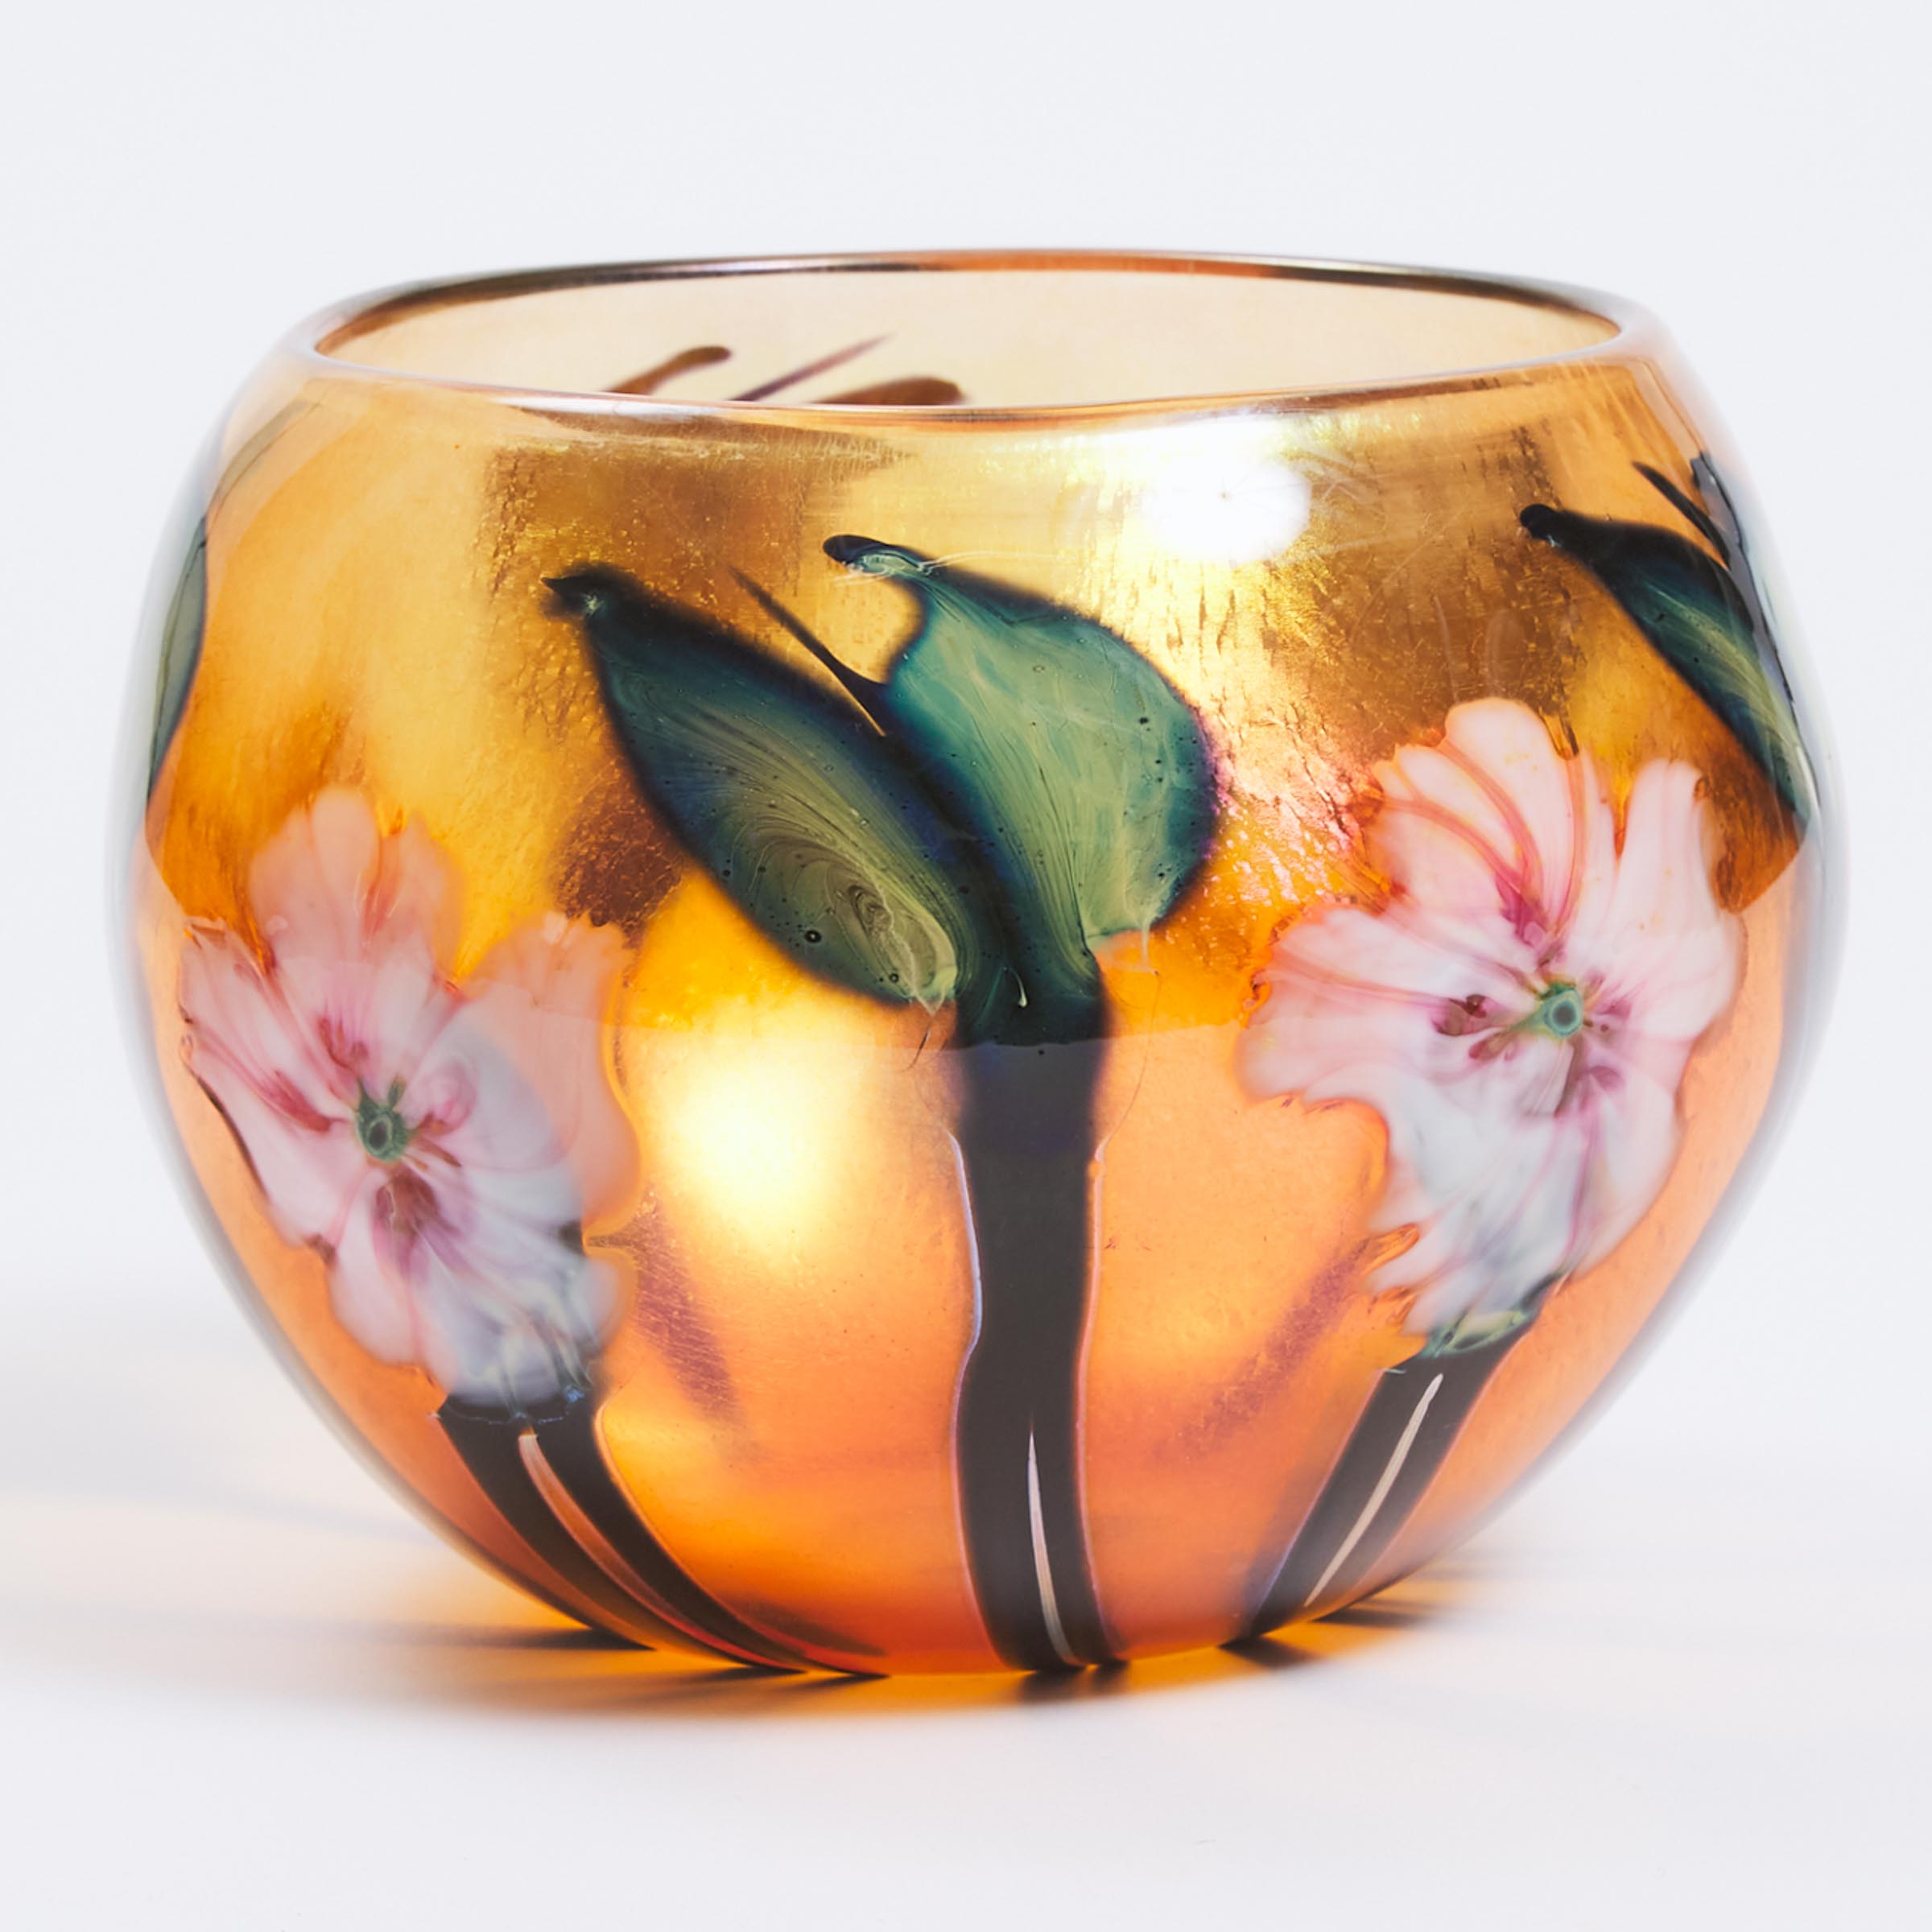 Charles Lotton (American, 1935-2021), 'Multi-Flora' Glass Bowl, 1991